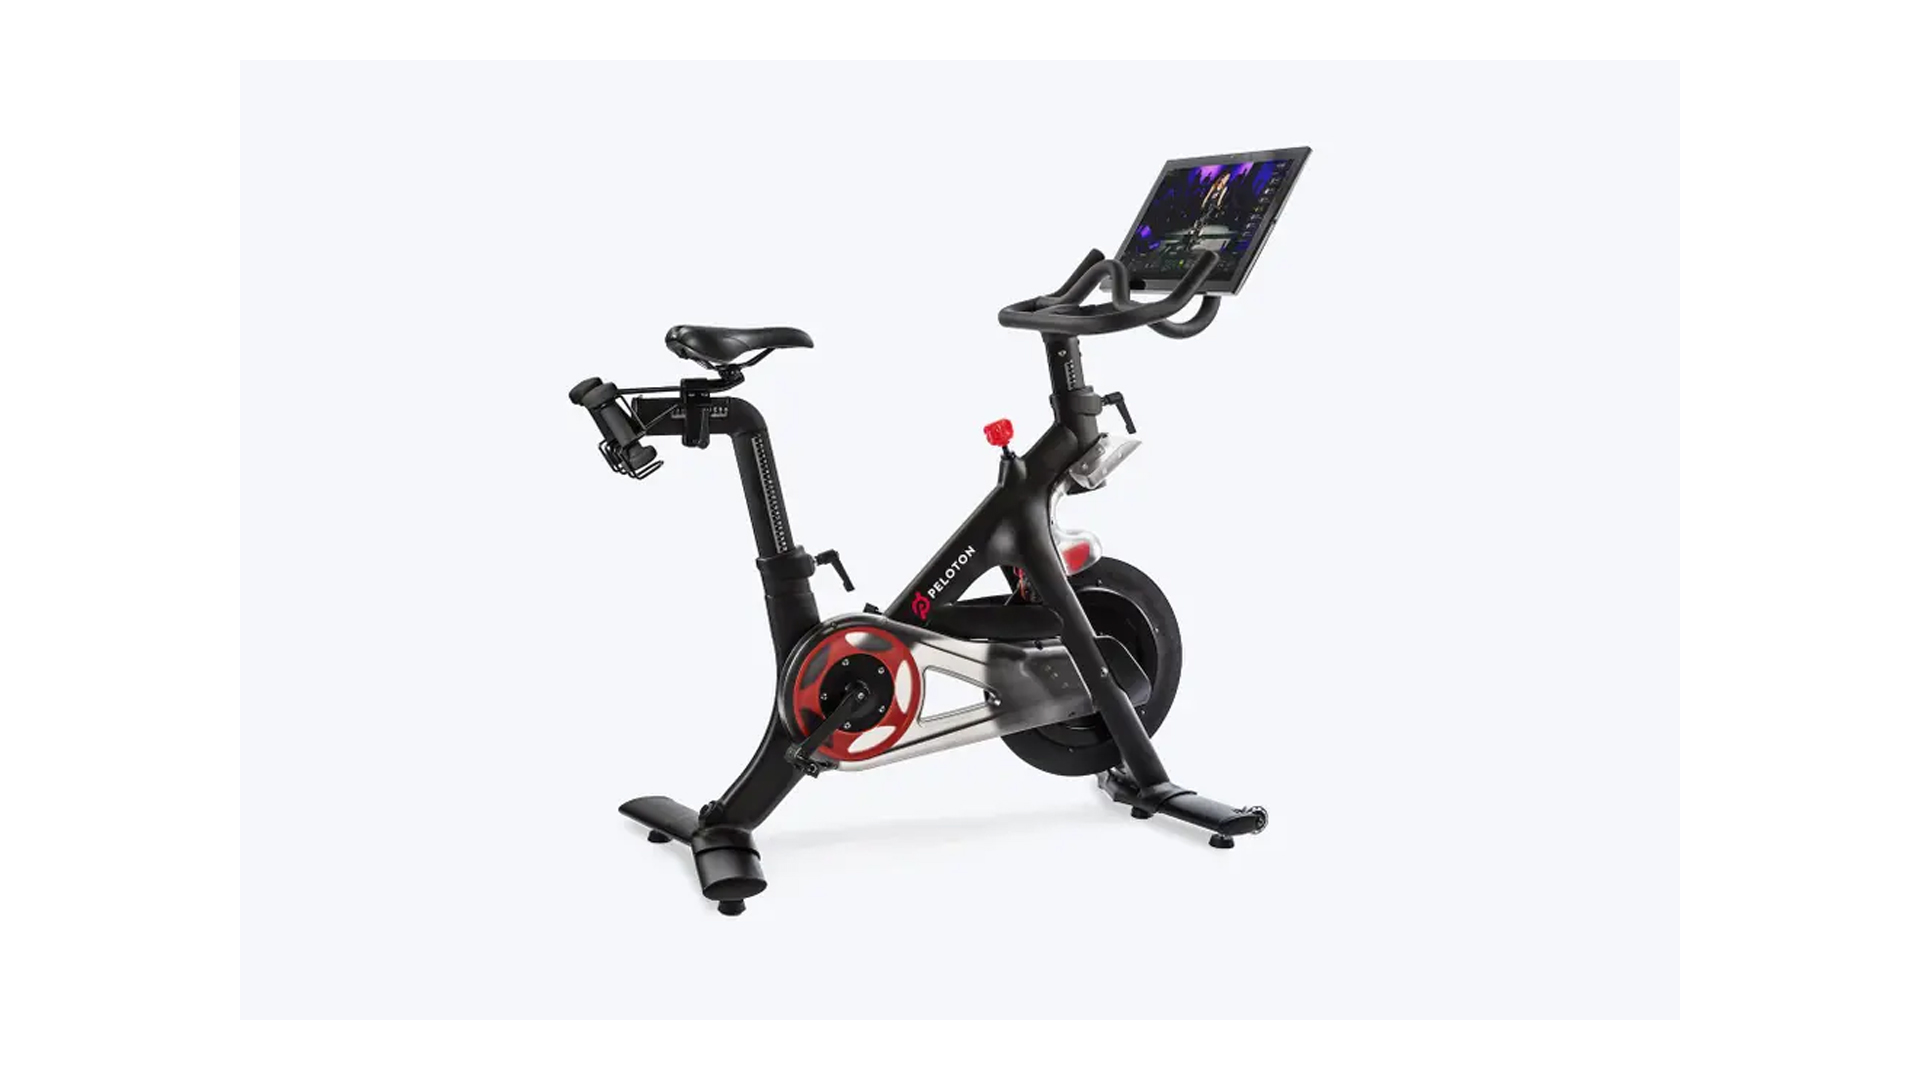 exercise bikes on sale: image shows peloton exercise bike